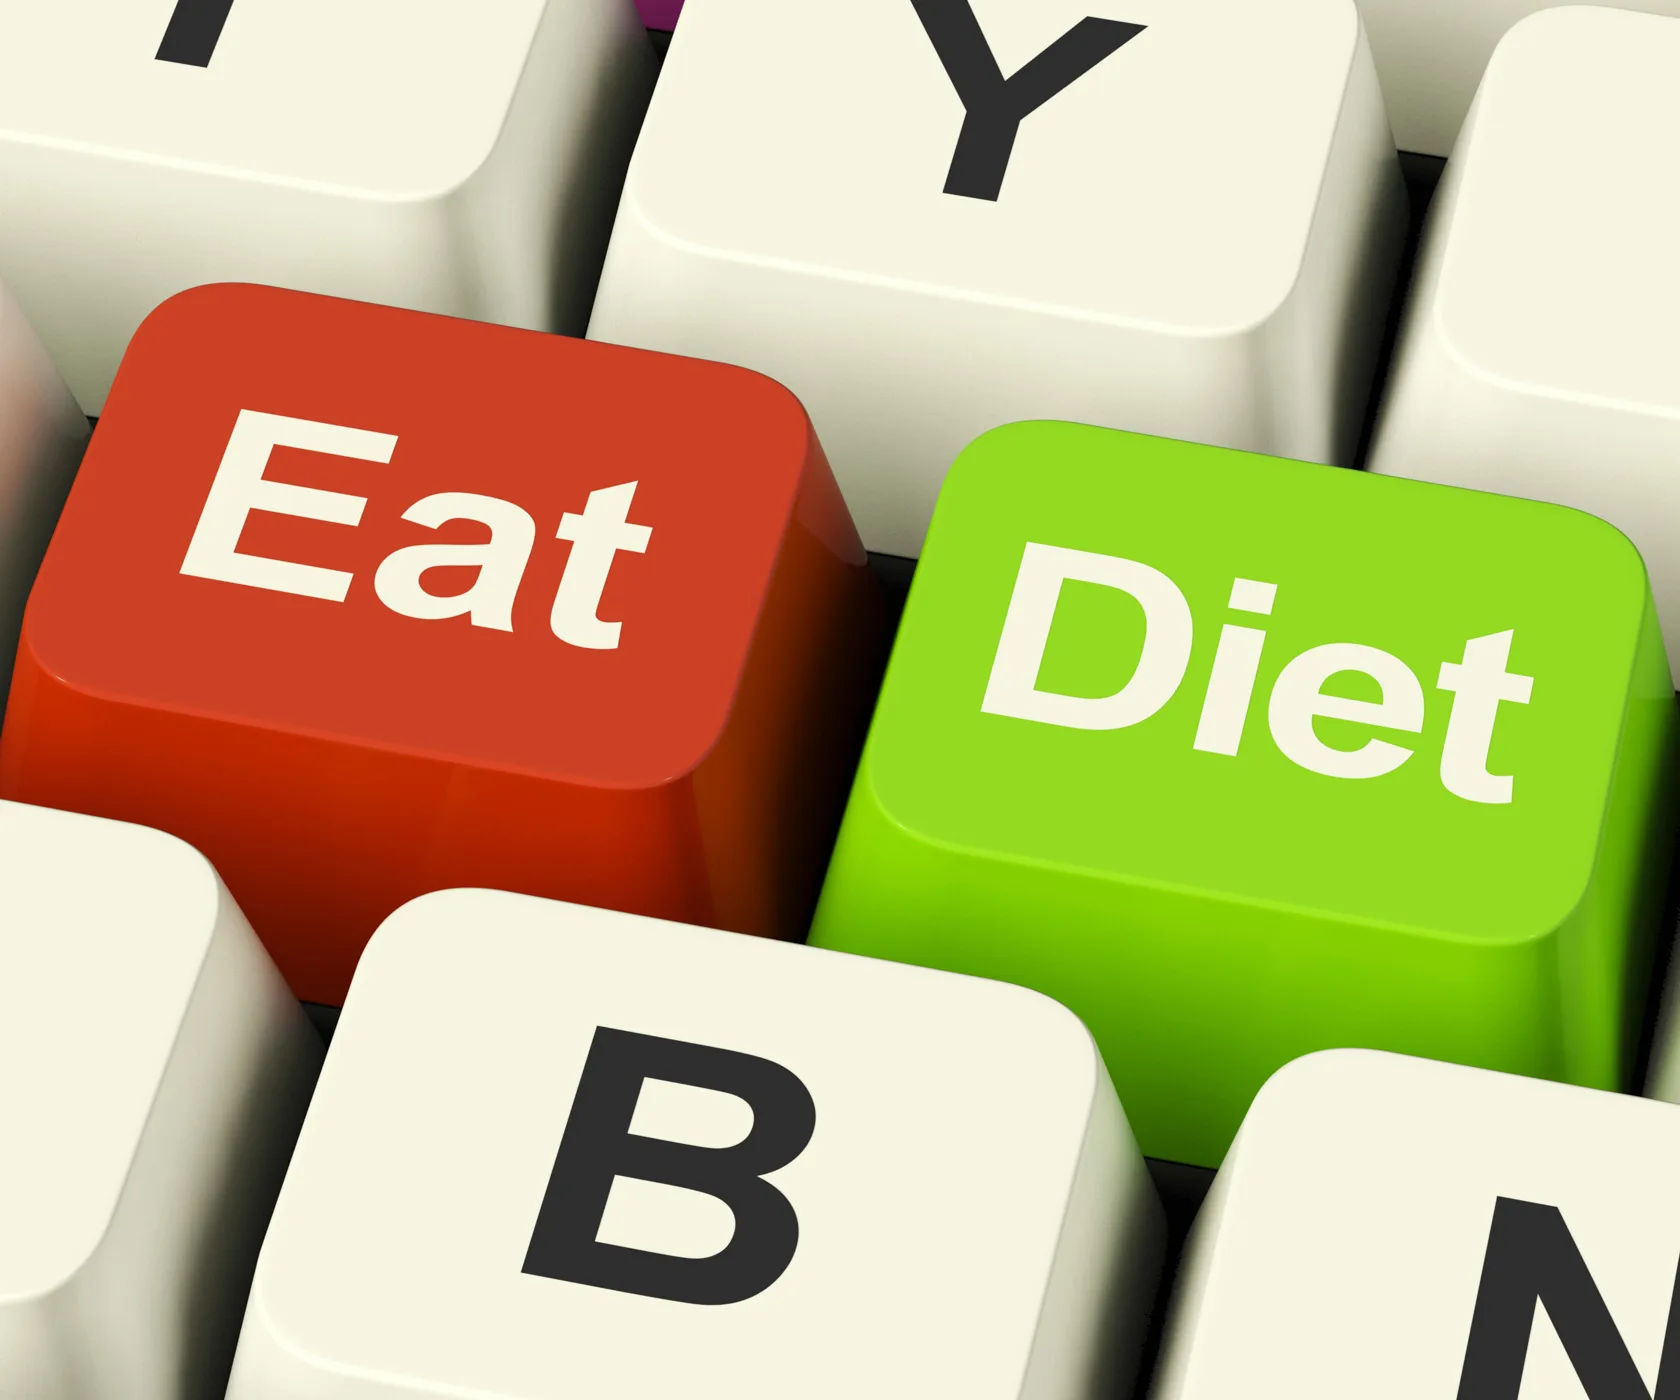 Eat Diet Keys Showing Fiber Exercise Fat And Calorie Appetite Advice Online